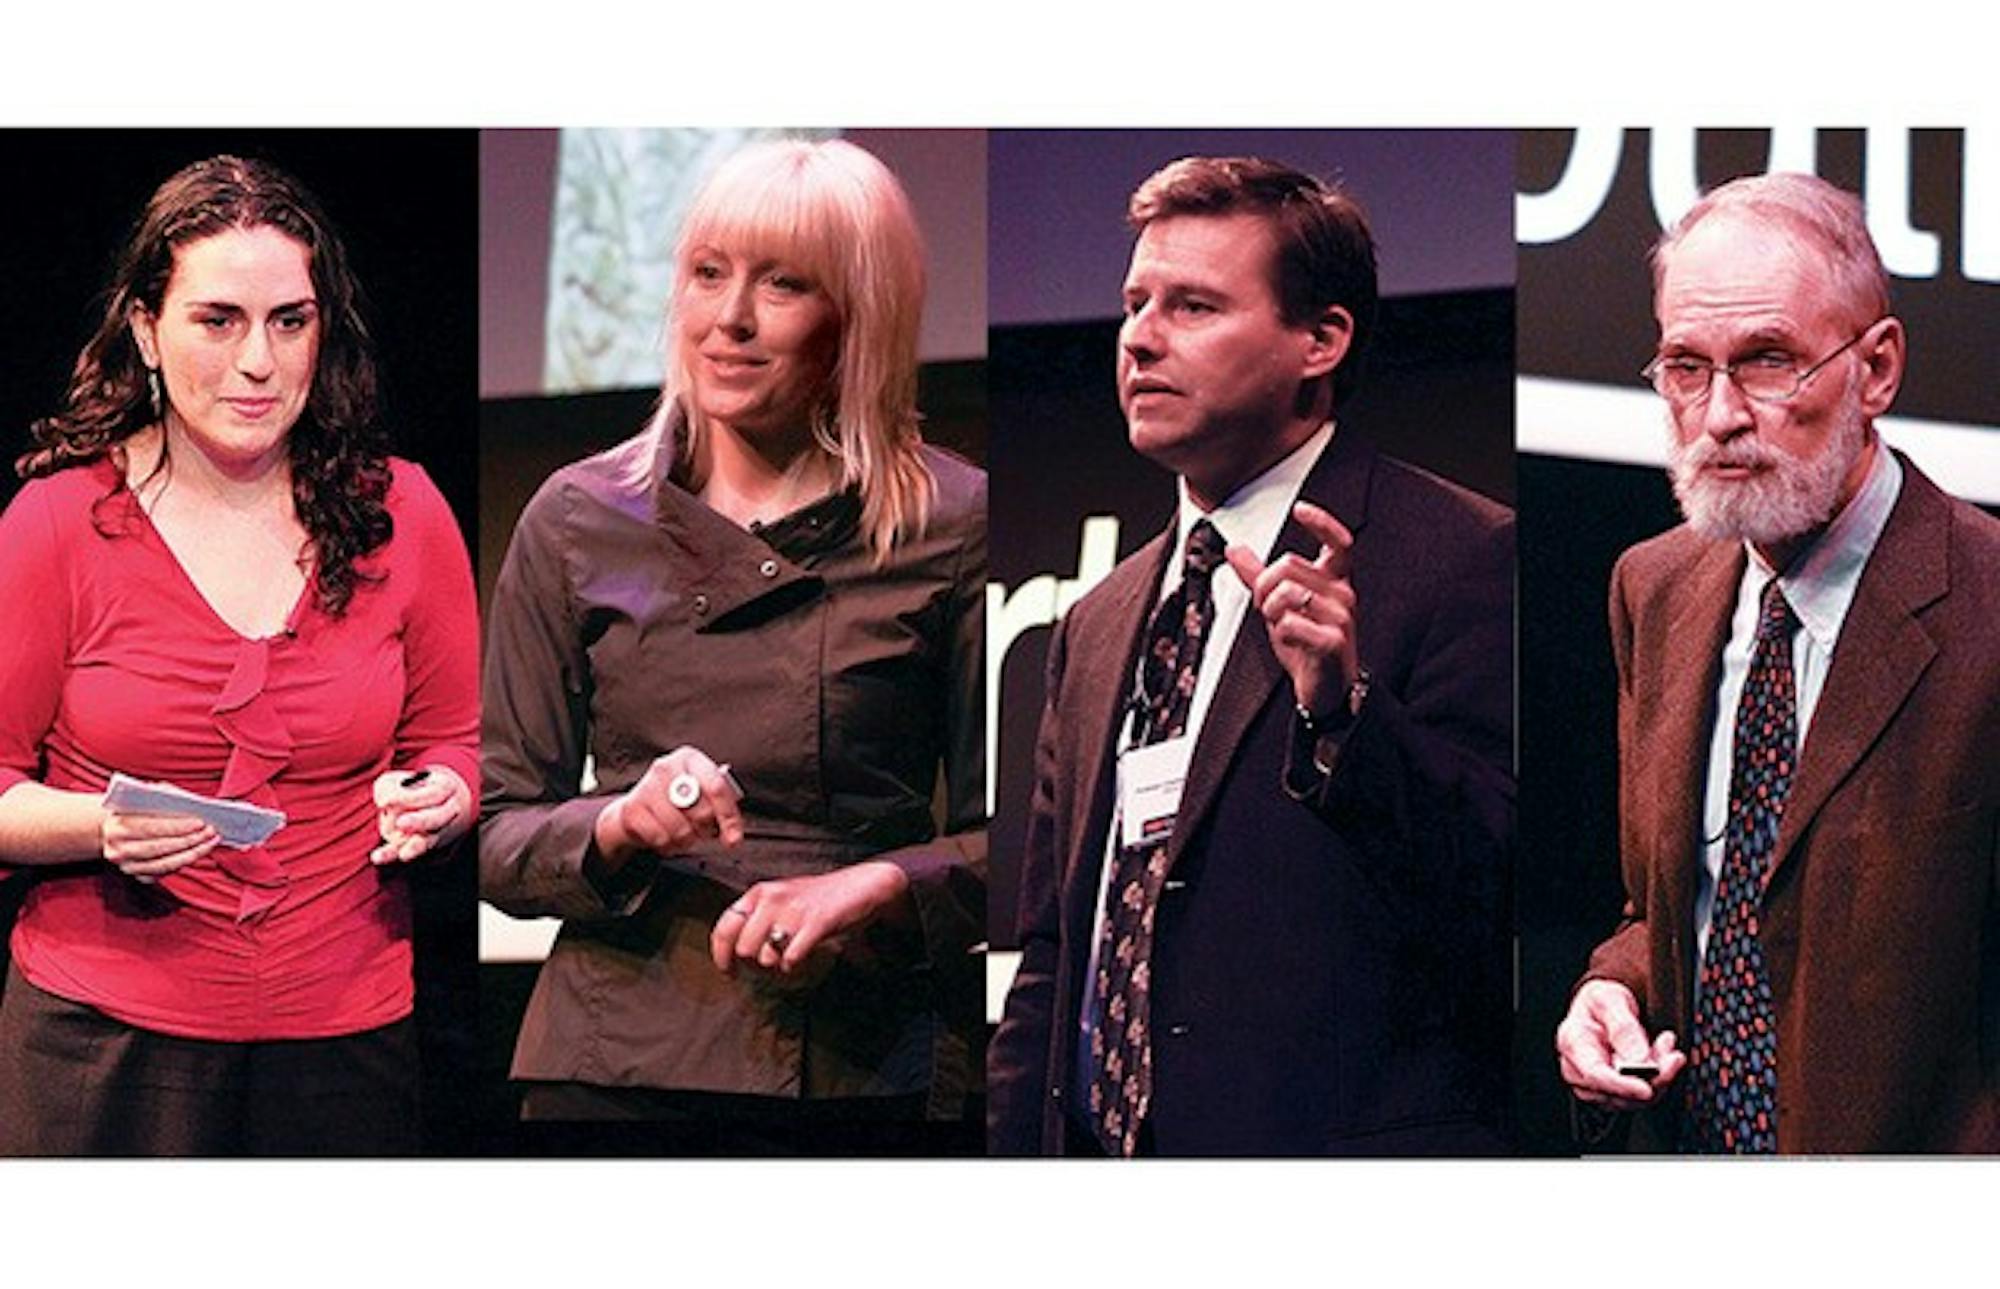 Speakers at TEDx Dartmouth included Micaela Klein '10, professor Mary Flanagan, professor Charles Wheelan and professor Larry Crocker.